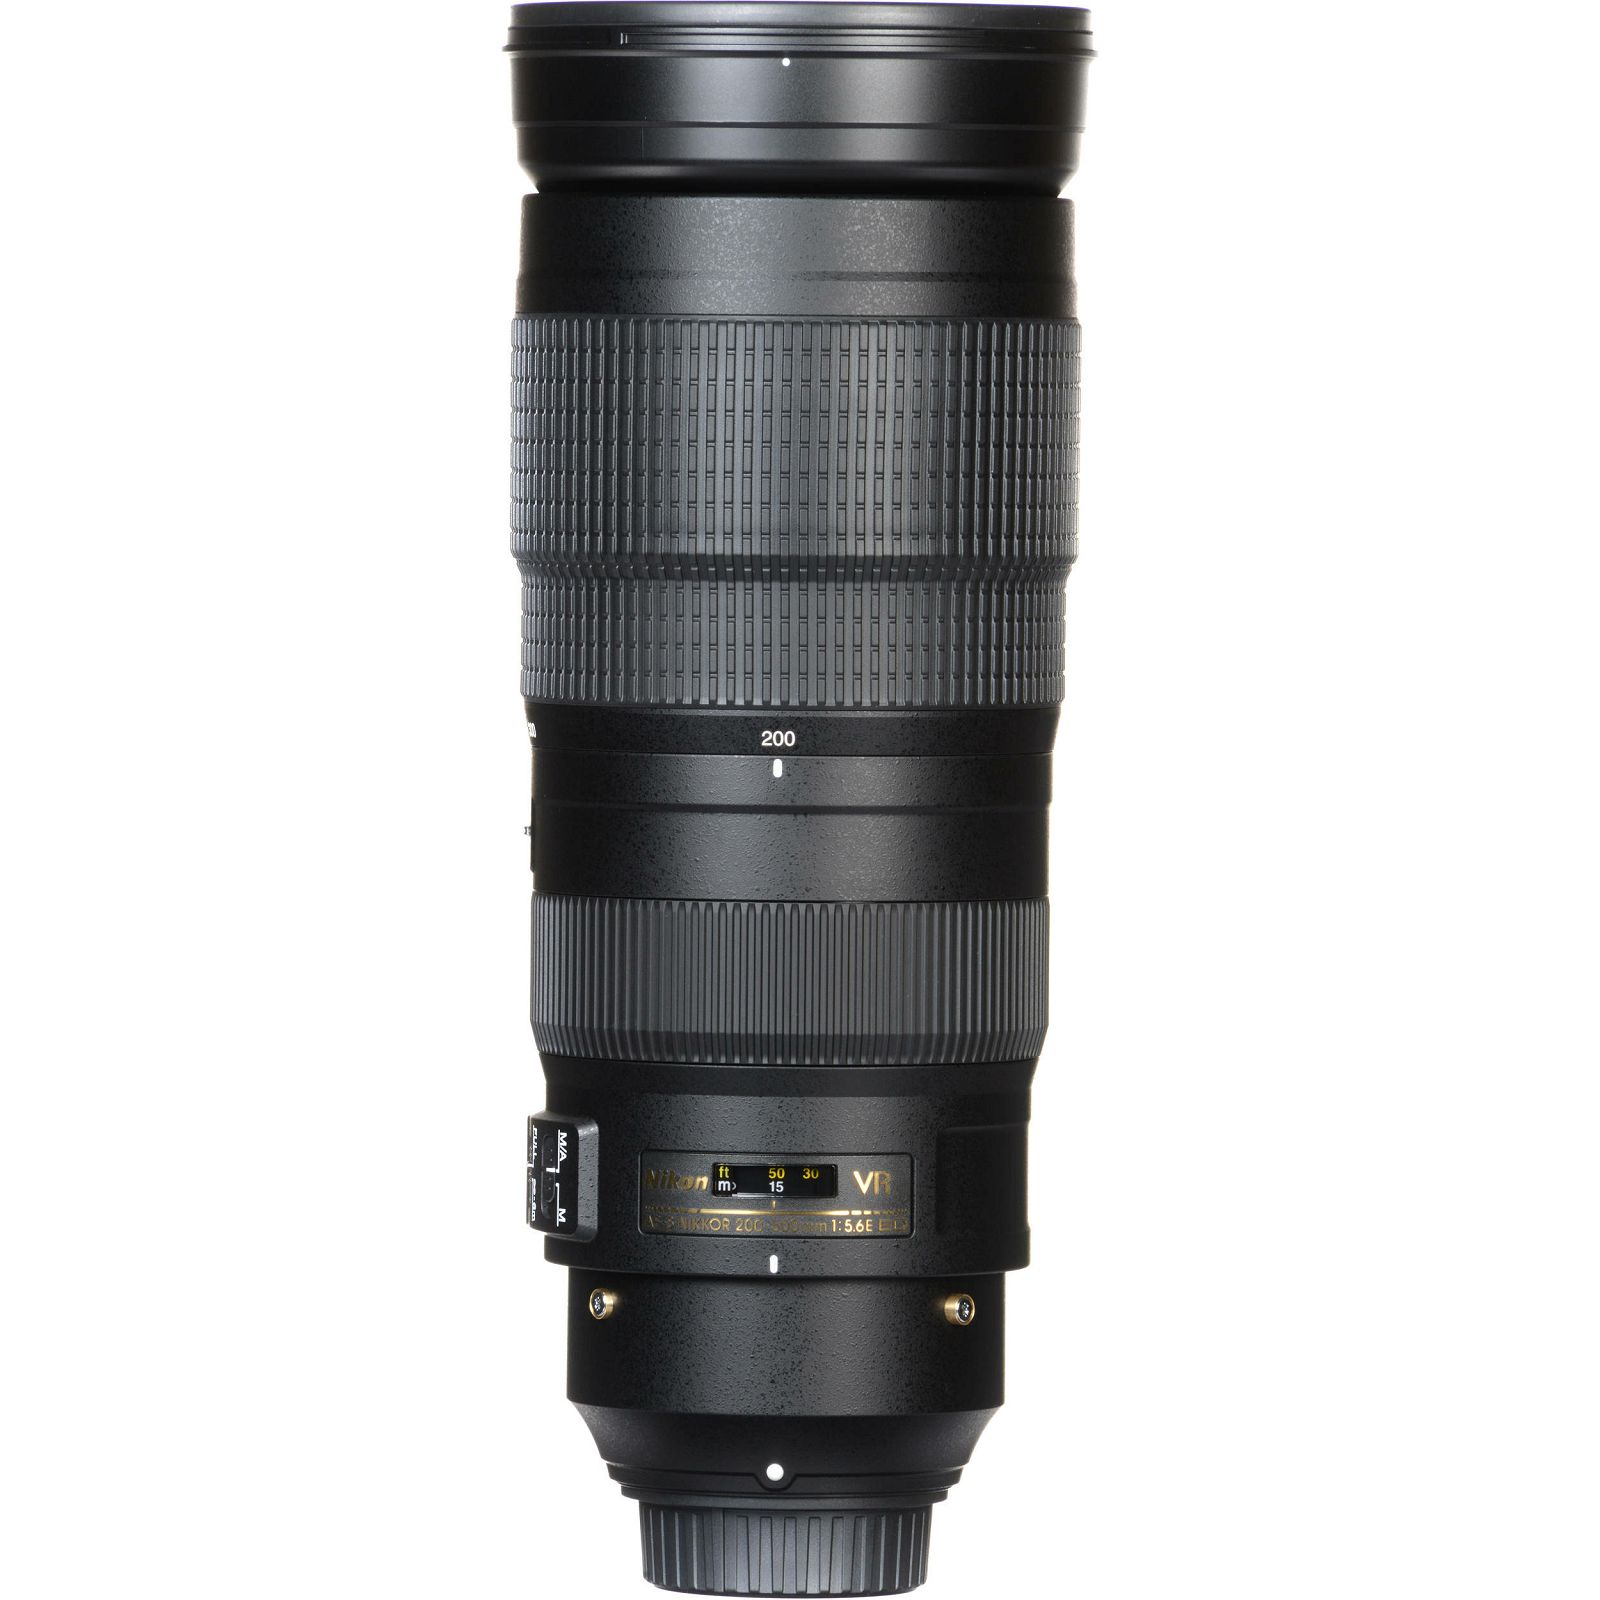 Nikon AF-S 200-500mm f/5.6E ED VR FX telefoto objektiv Nikkor auto focus zoom lens 200-500 f/5.6 f5.6 E f5.6E (JAA822DA)